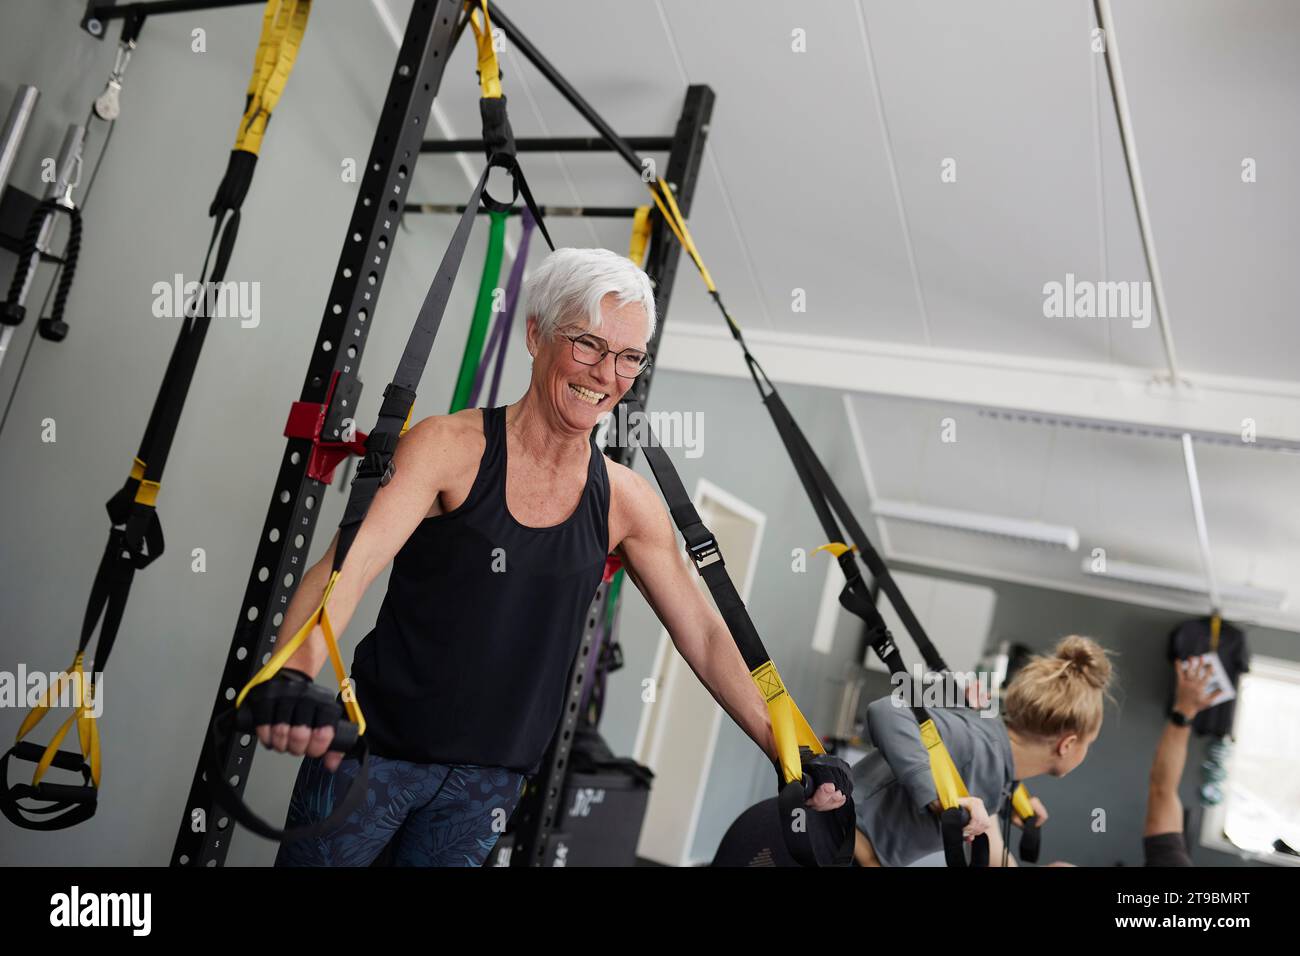 Frau mit Trainingsgeräten im Fitnessstudio Stockfoto